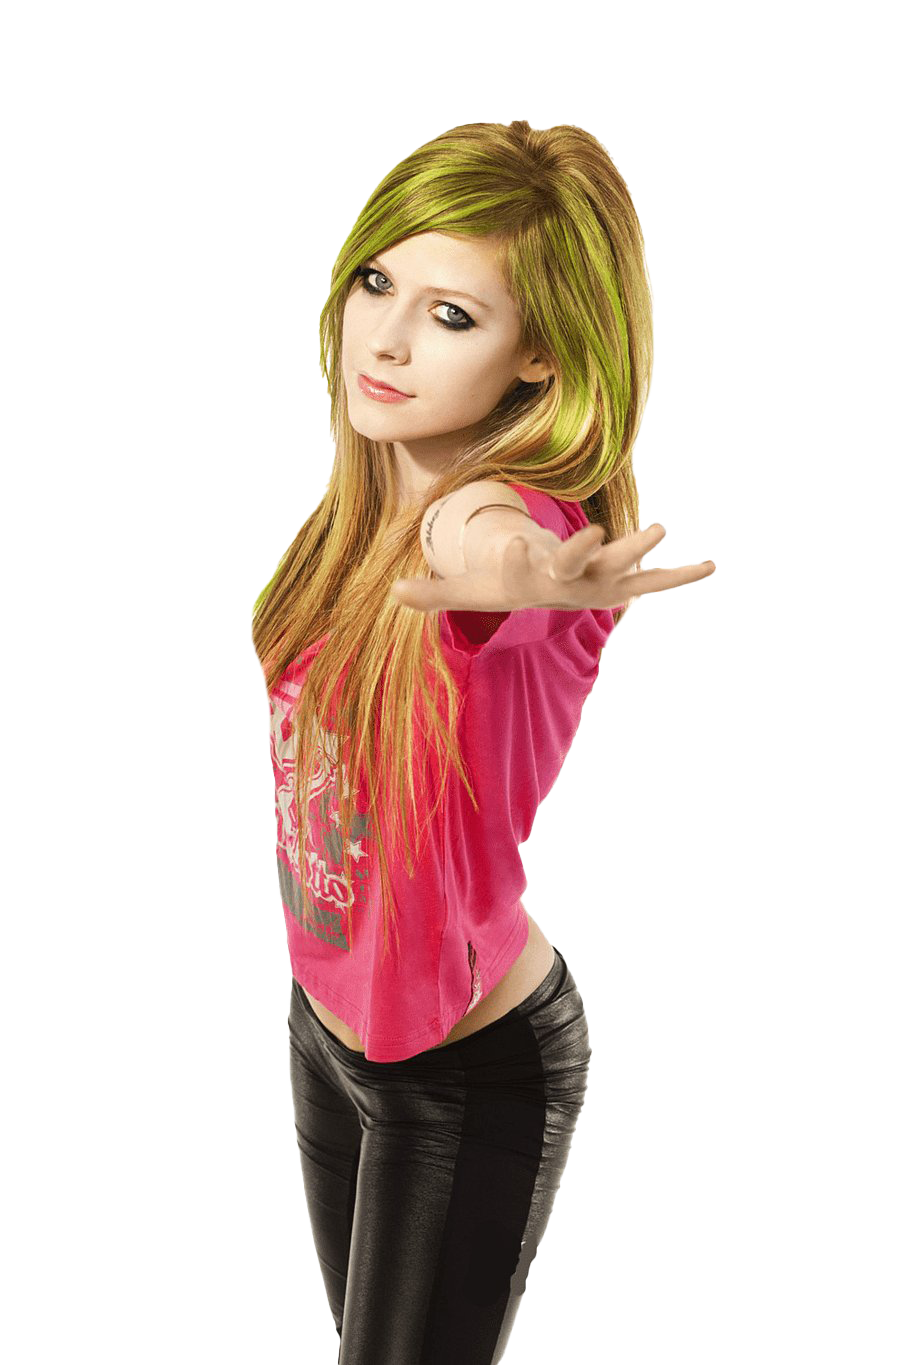 Avril Lavigne Transparent